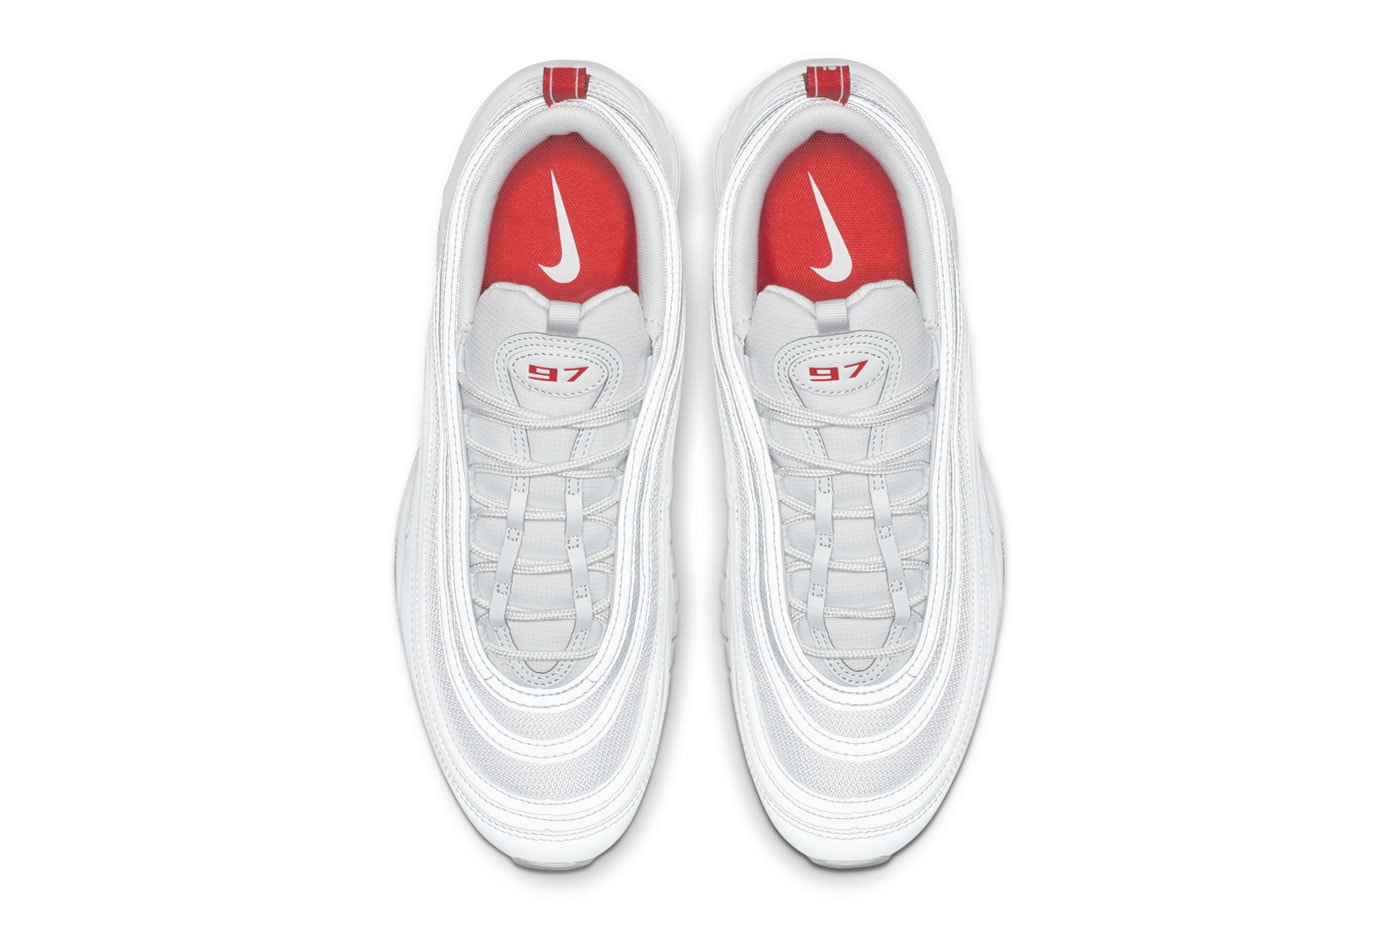 Nike Air Max 97 Team Orange Release Date sneaker shoes Pure Platinum White